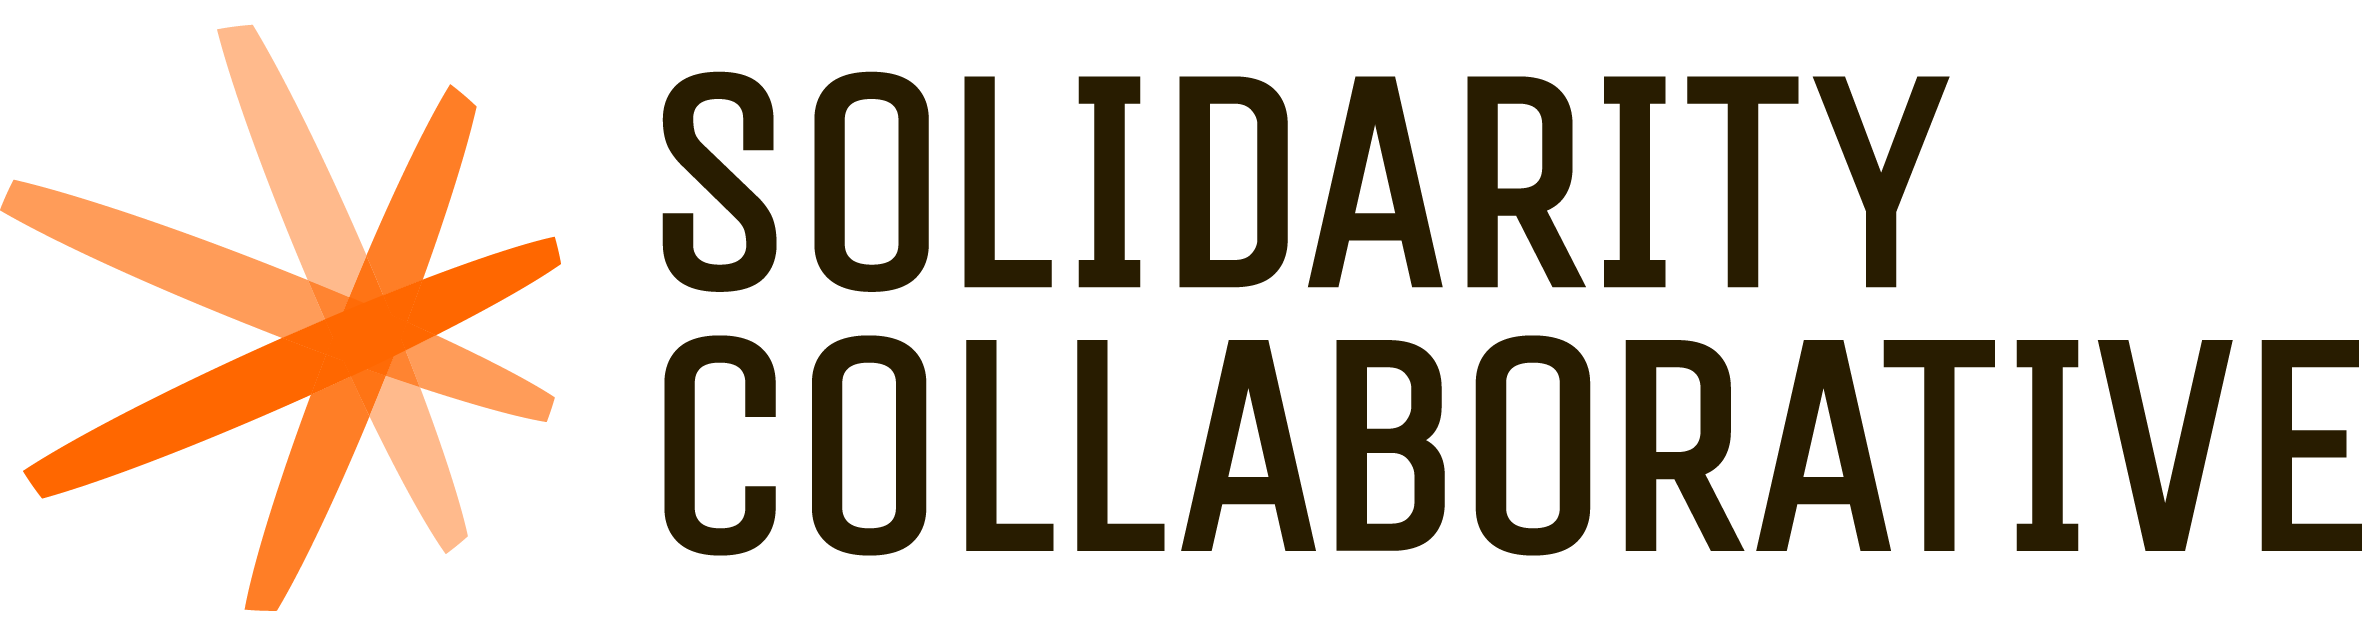 Solidarity Collaborative